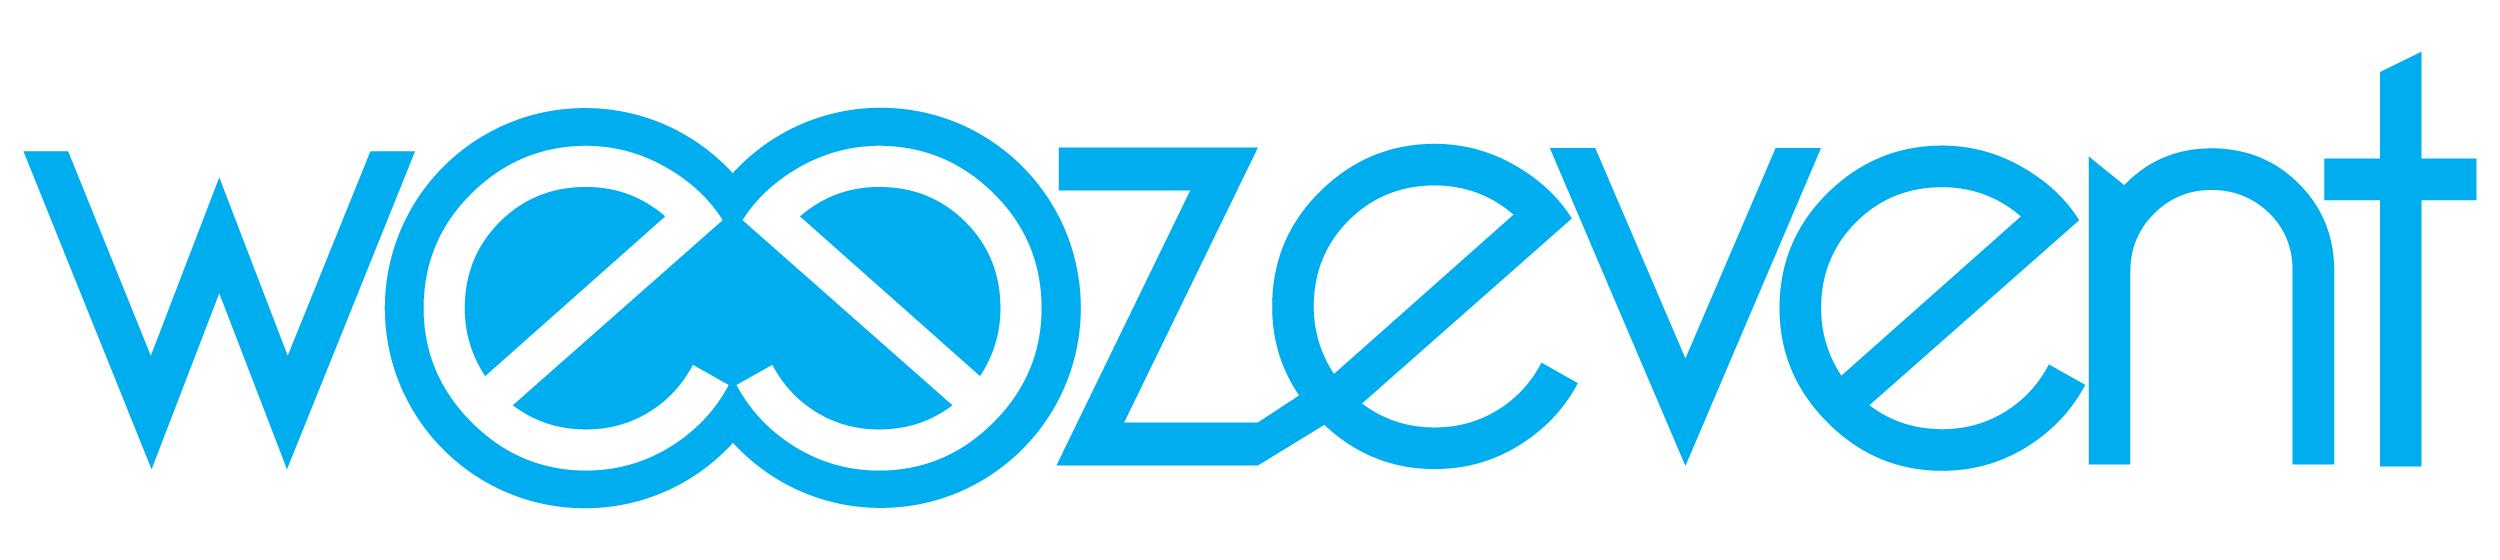 Weez/event Logo